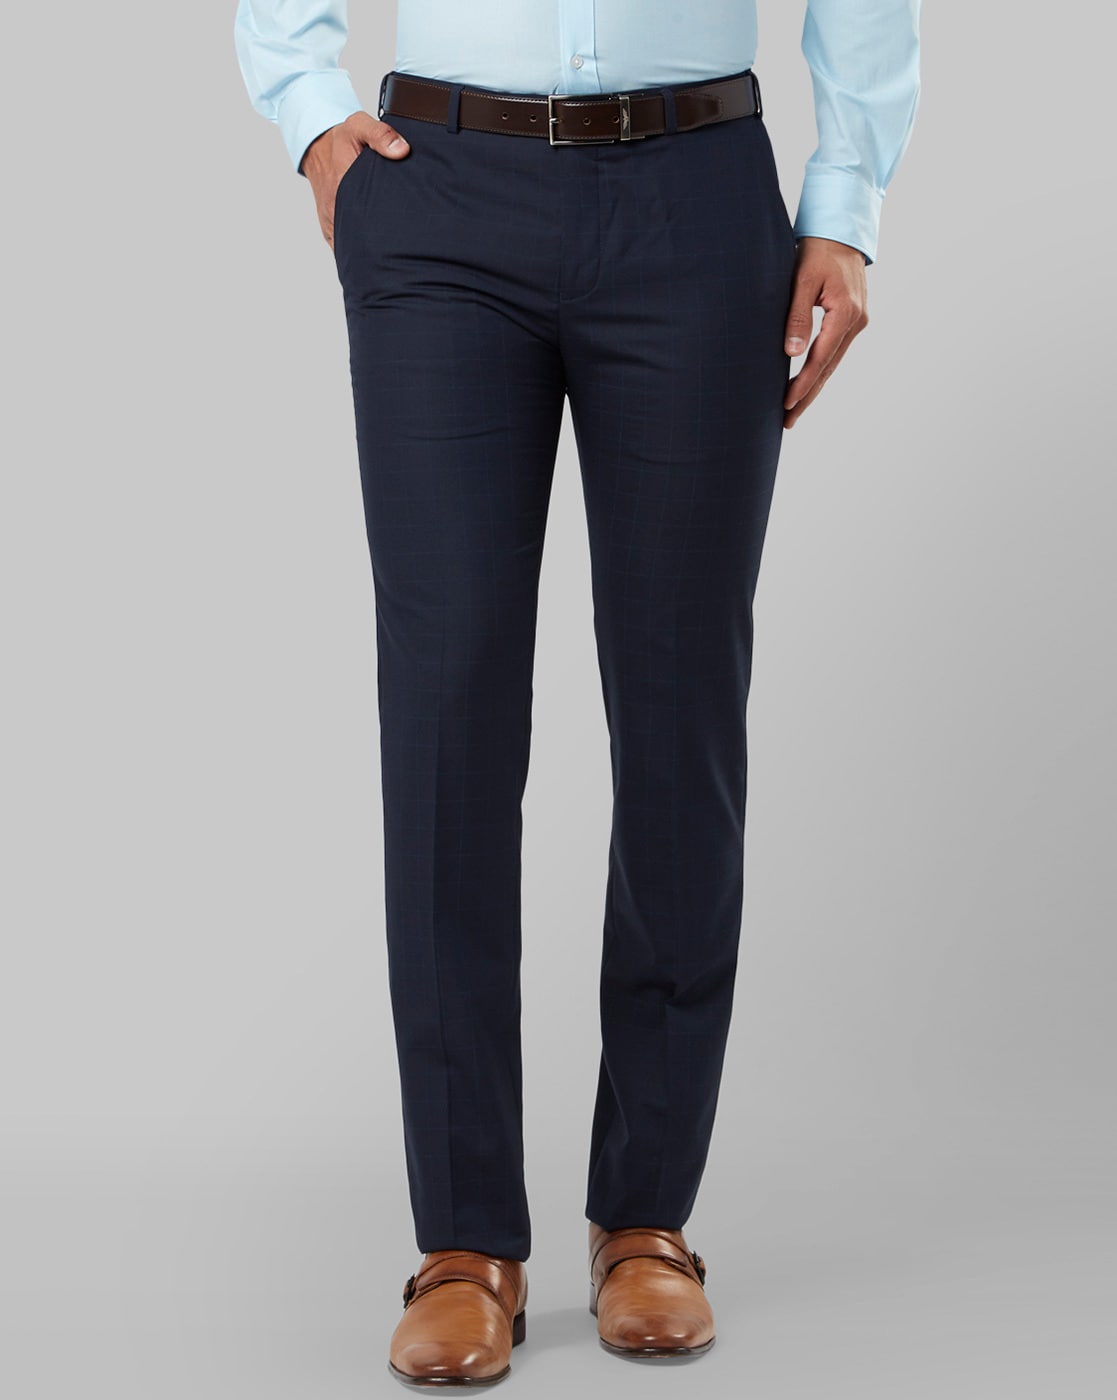 Raymond Slim Fit Men Grey Trousers  Buy Raymond Slim Fit Men Grey Trousers  Online at Best Prices in India  Flipkartcom